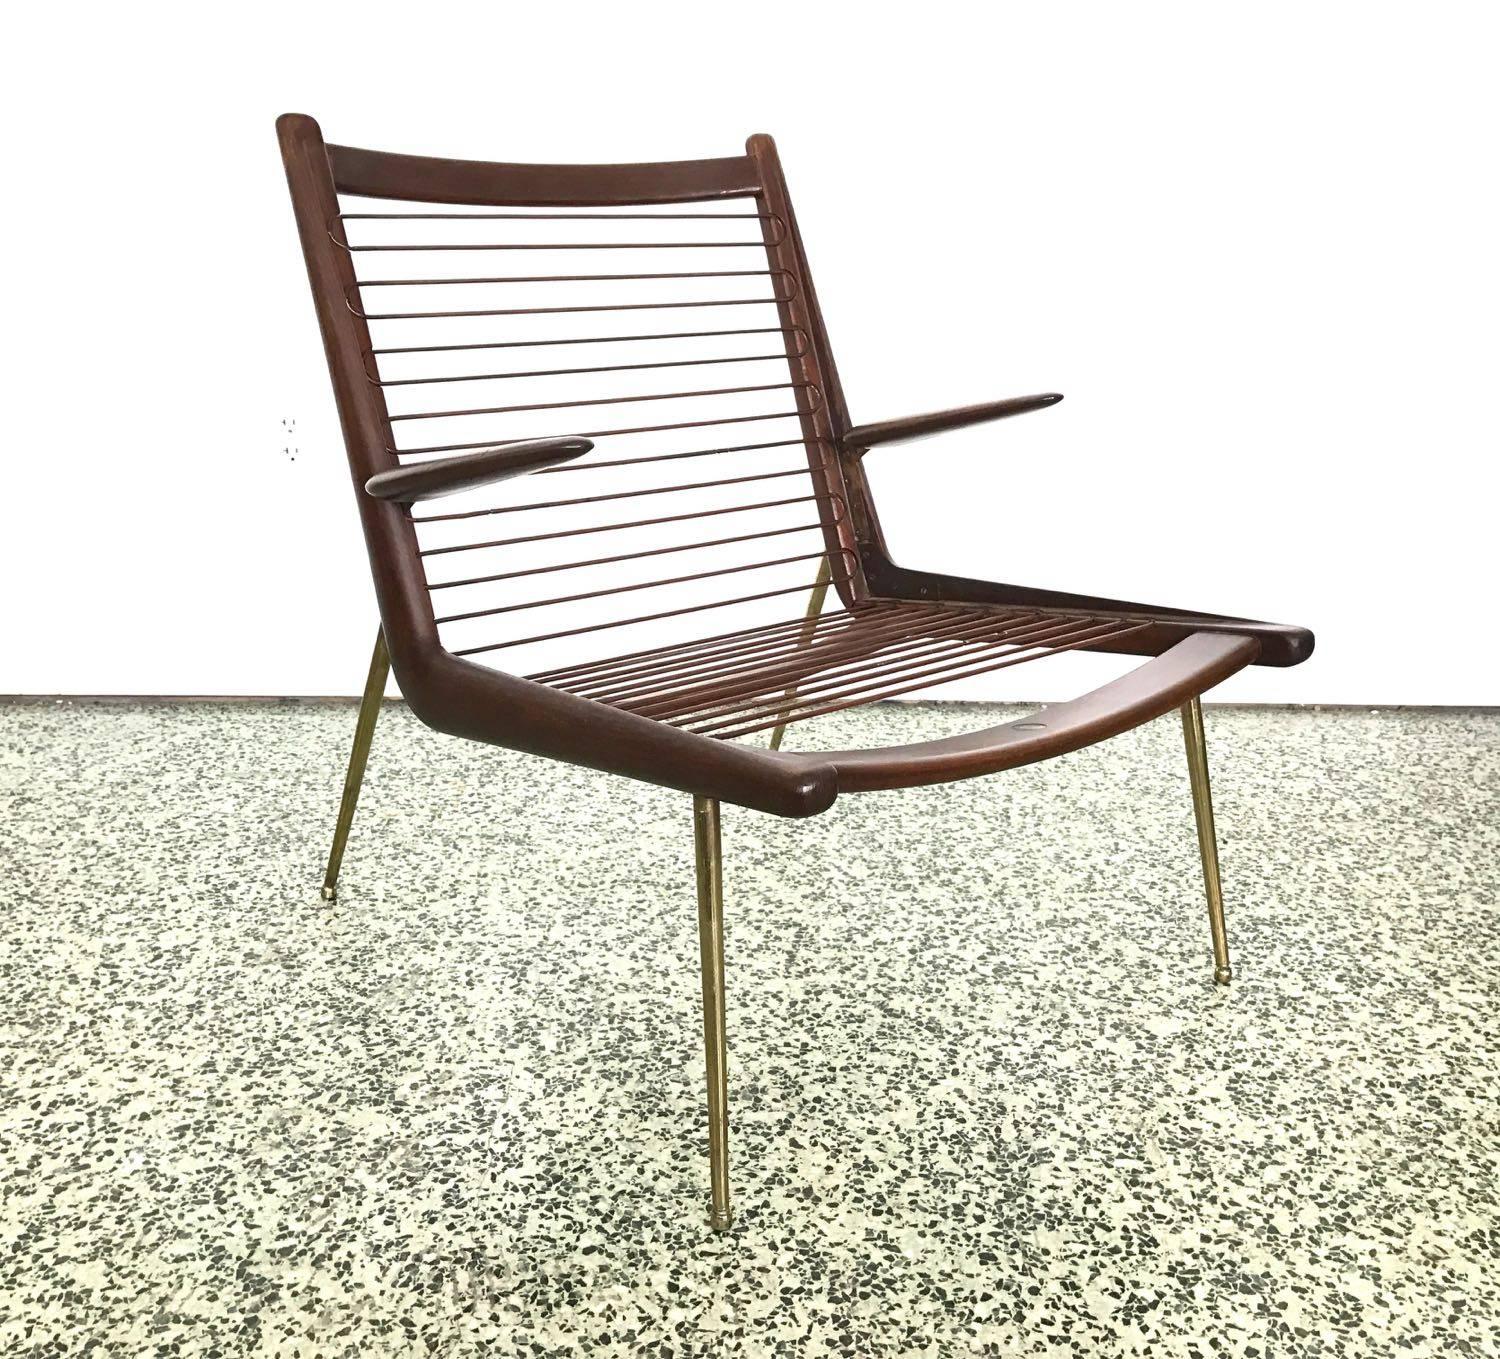 Mid-20th Century FD135 'Boomerang' Chair by Peter Hvidt + Orla Mølgaard-Nielsen